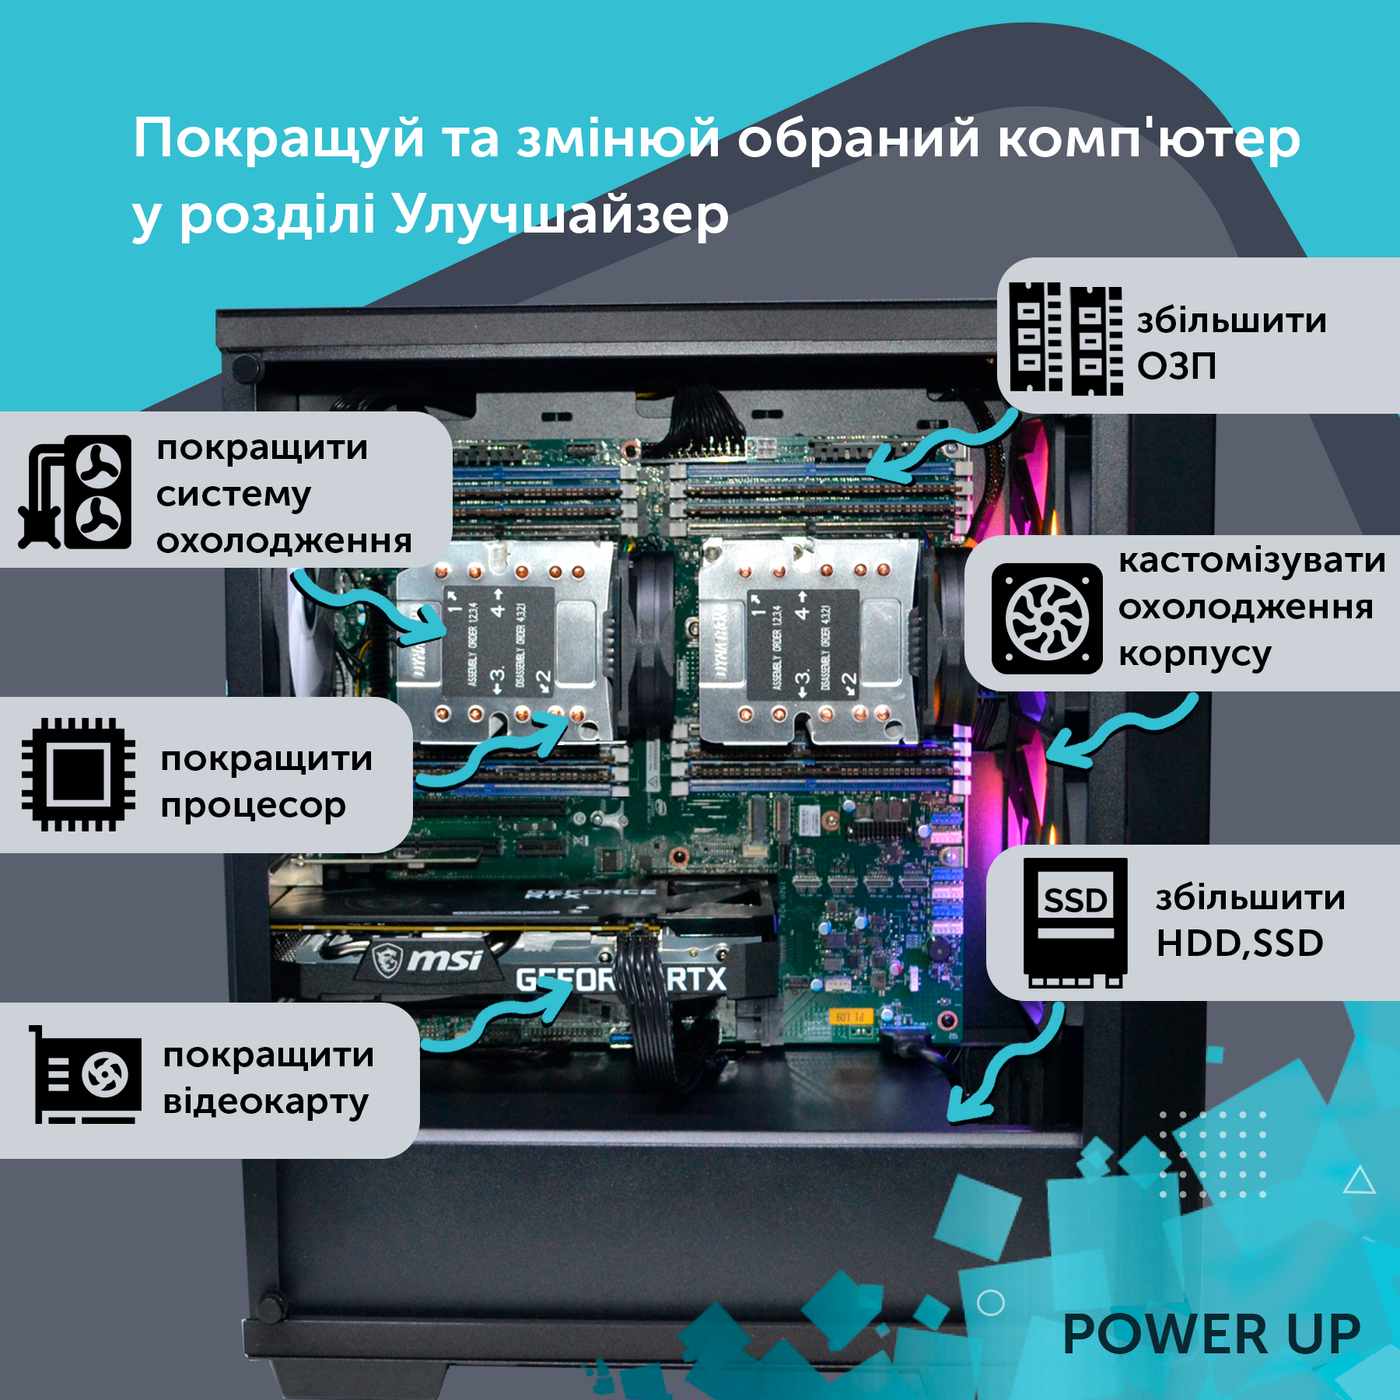 Двопроцесорна робоча станція PowerUp #238 Xeon E5 2699 v4 x2/64 GB/HDD 1 TB/SSD 512GB/NVIDIA Quadro RTX A4000 16GB